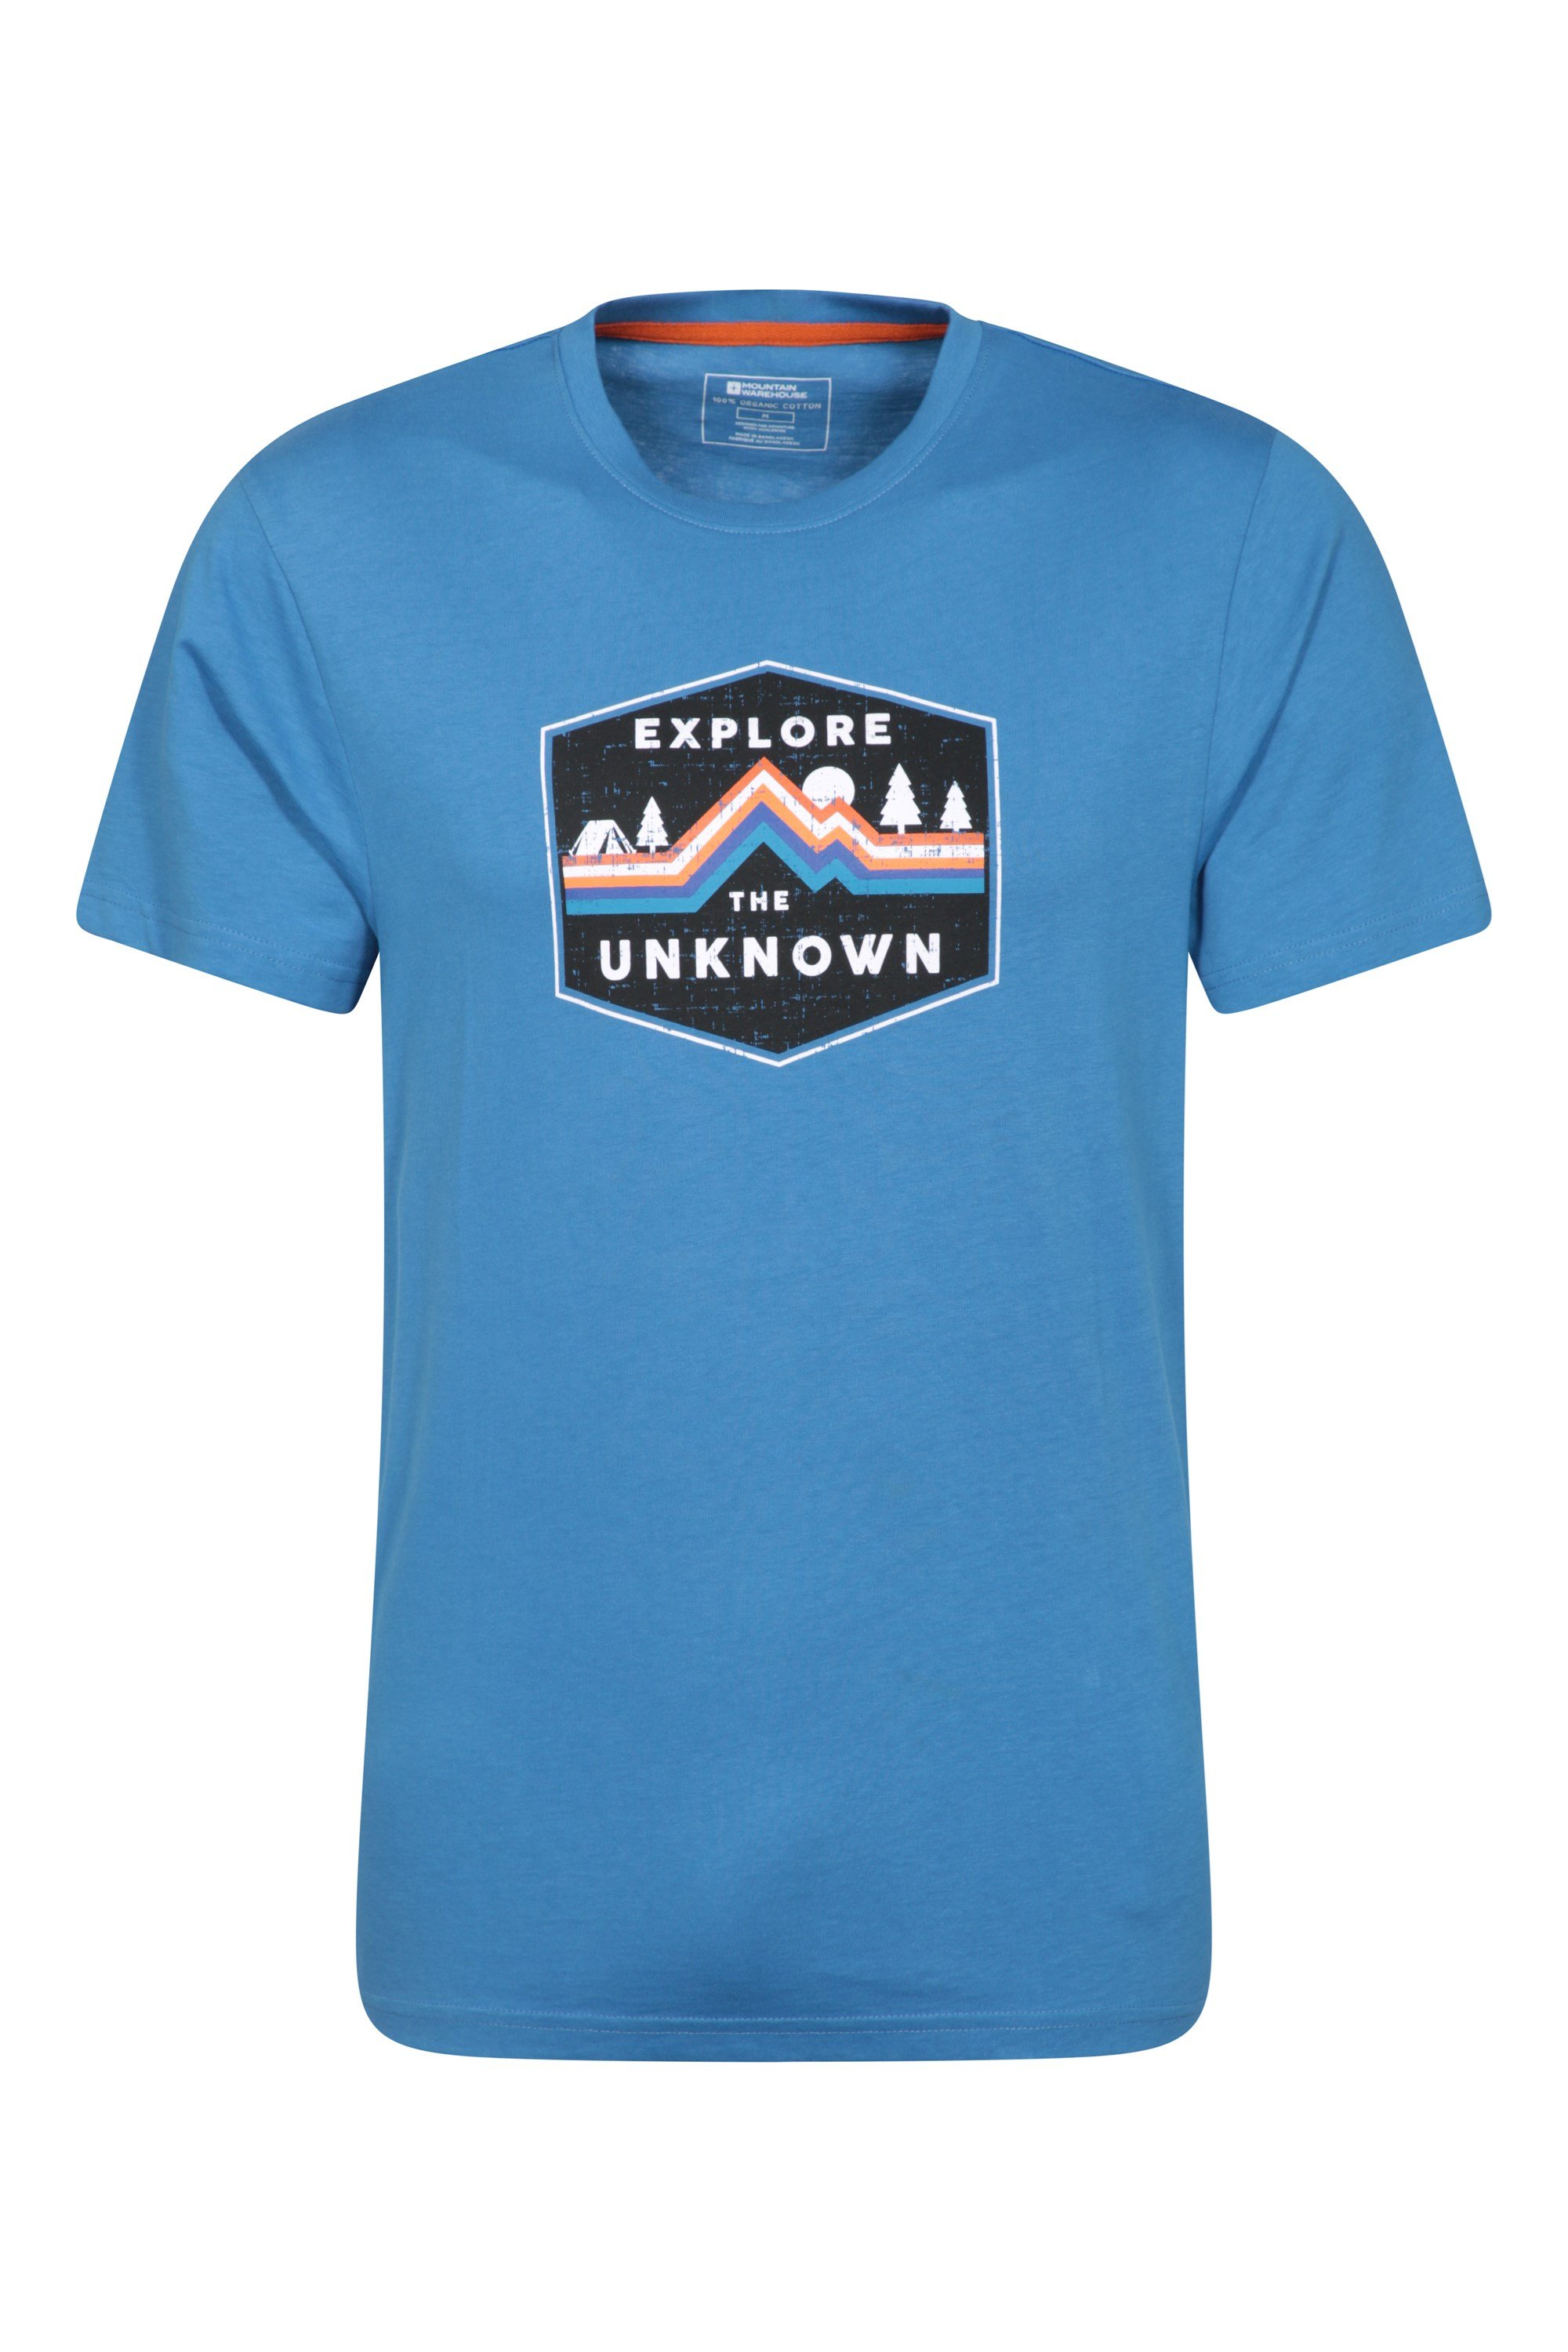 Explore The Unknown Mens Organic Cotton T-shirt - Blue